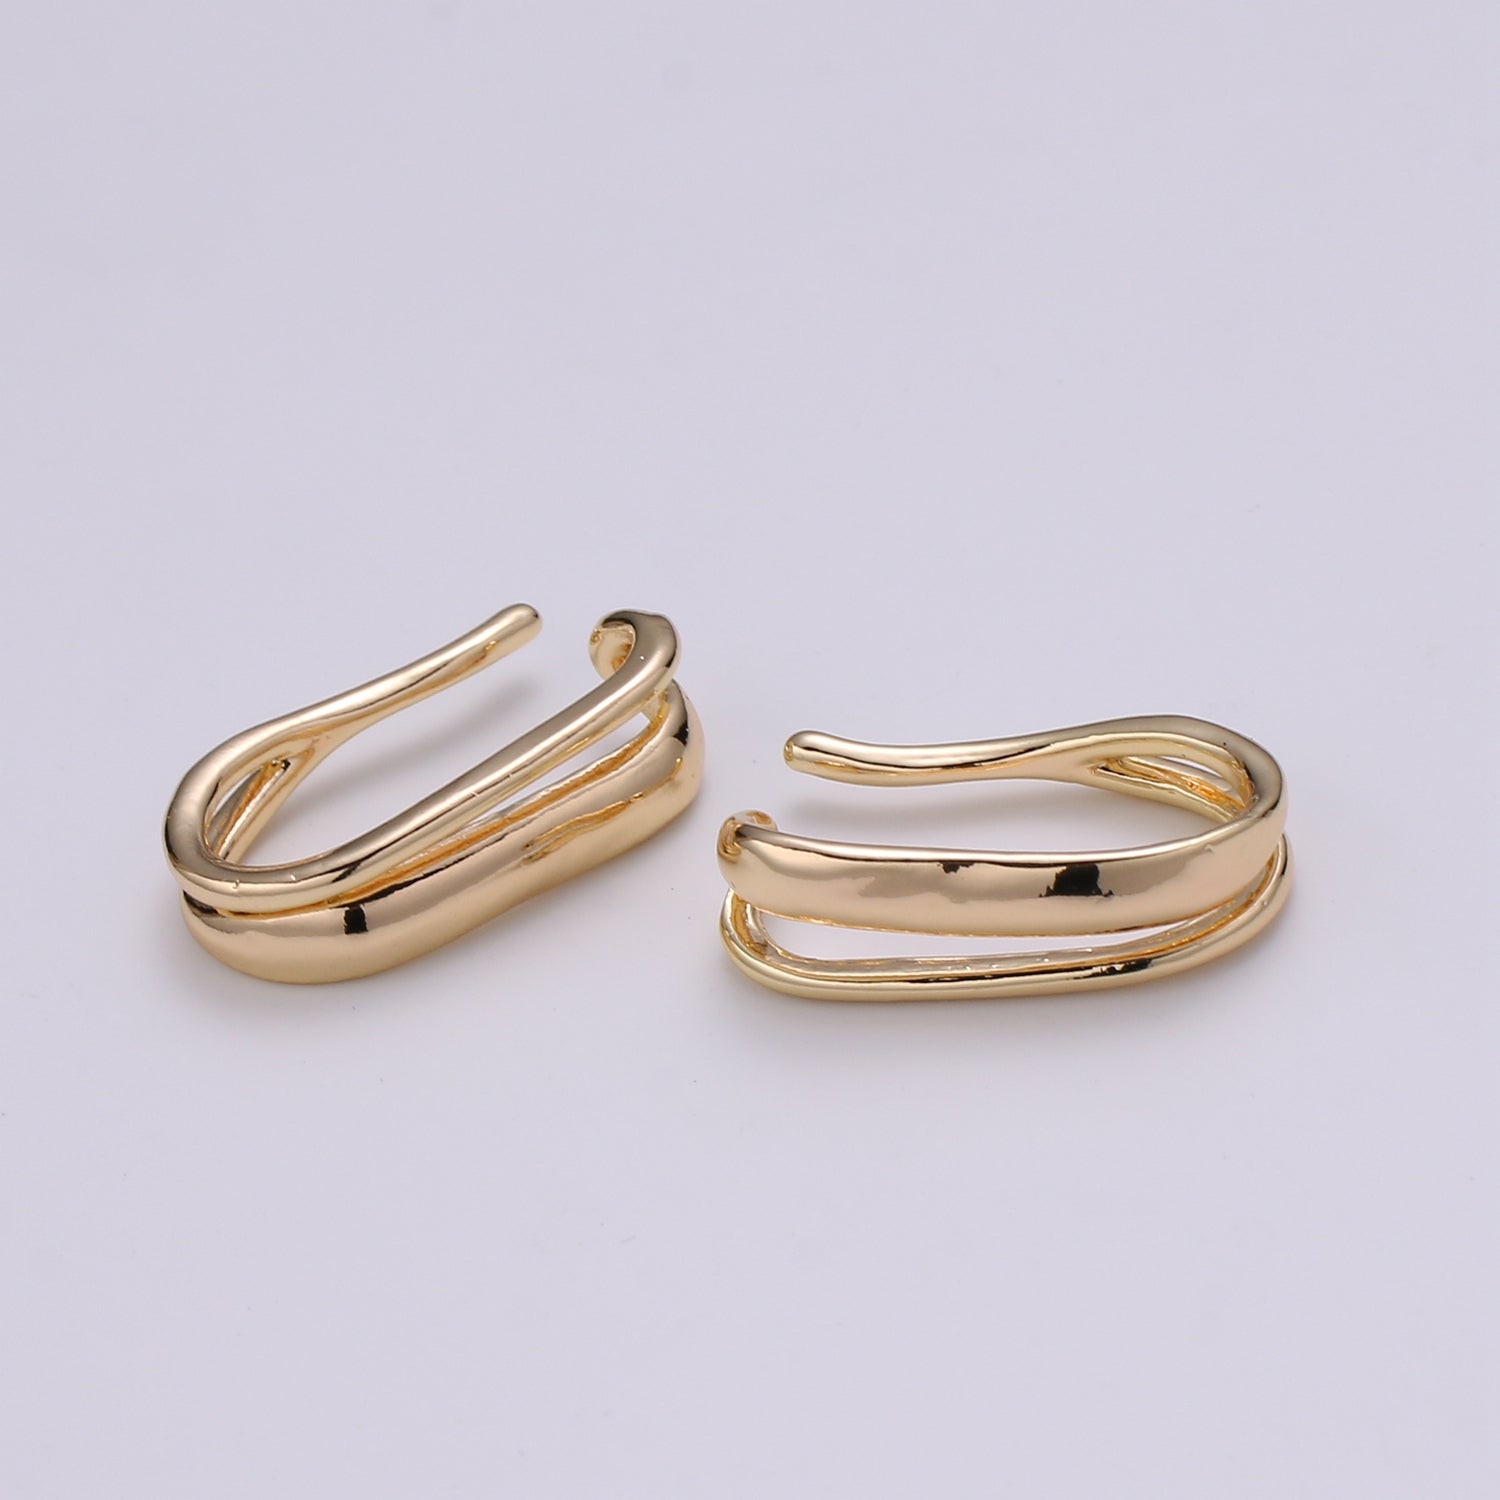 1Pair 18K gold Non Pierced Earring, Double Curb Earring, Earcuff for Cartilage, Simplicity Earring, Minimalist ear cuff, EARR-1397 - DLUXCA